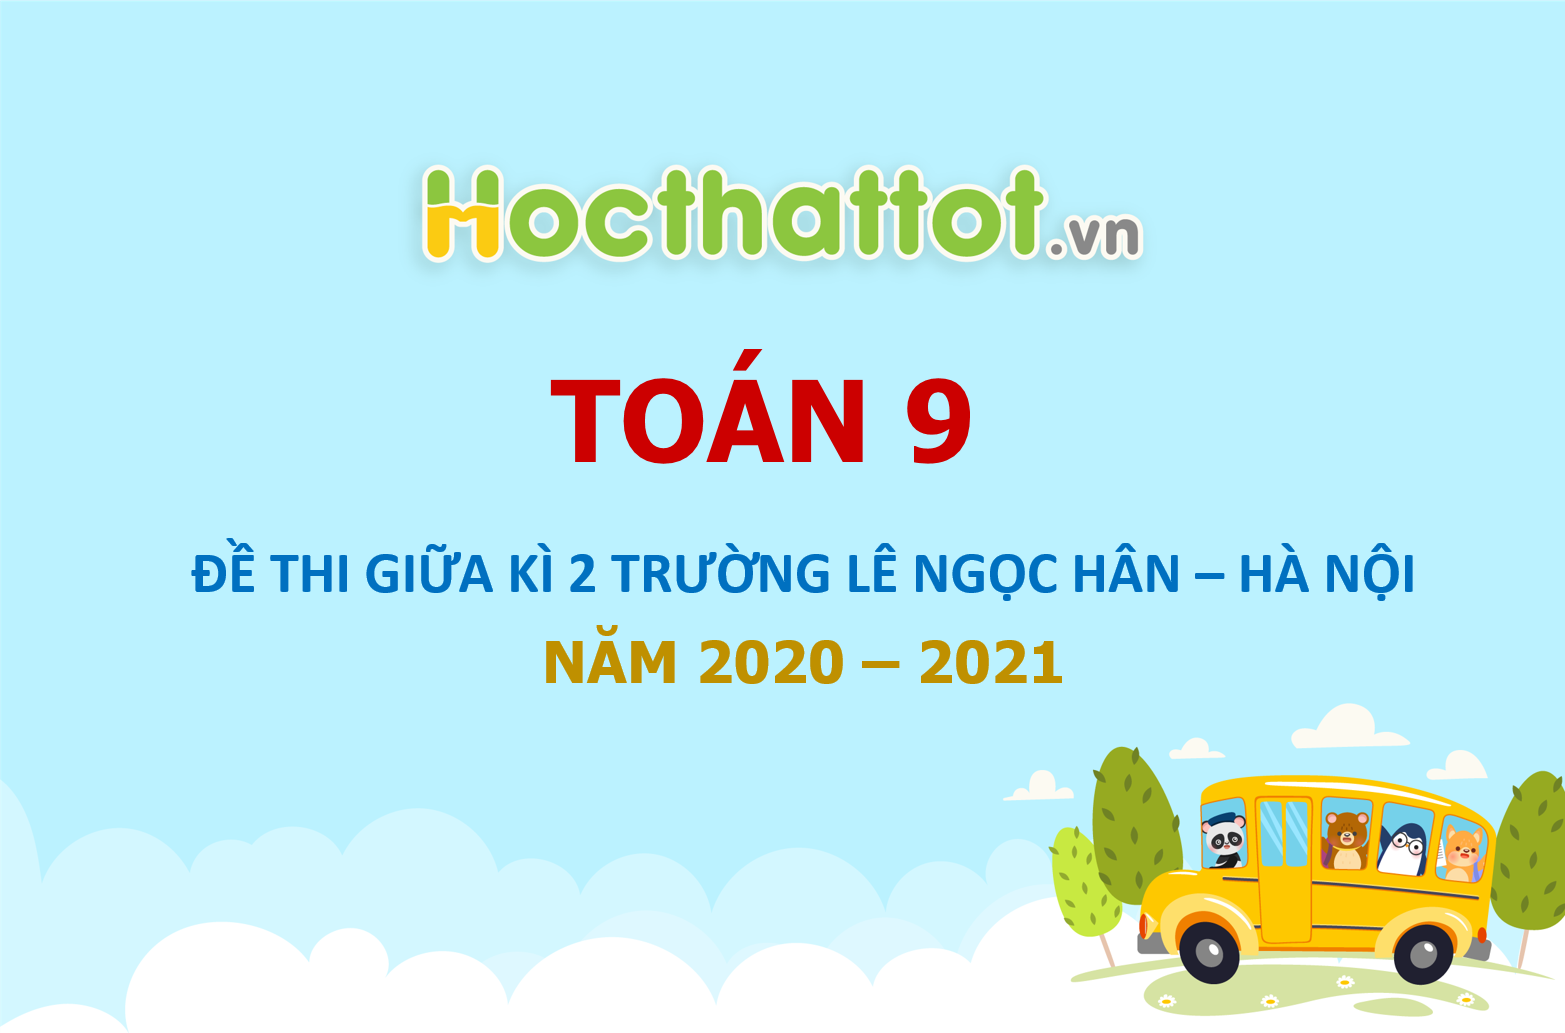 de-kiem-tra-giua-ky-2-toan-9-nam-2020-2021-truong-le-ngoc-han-ha-noi